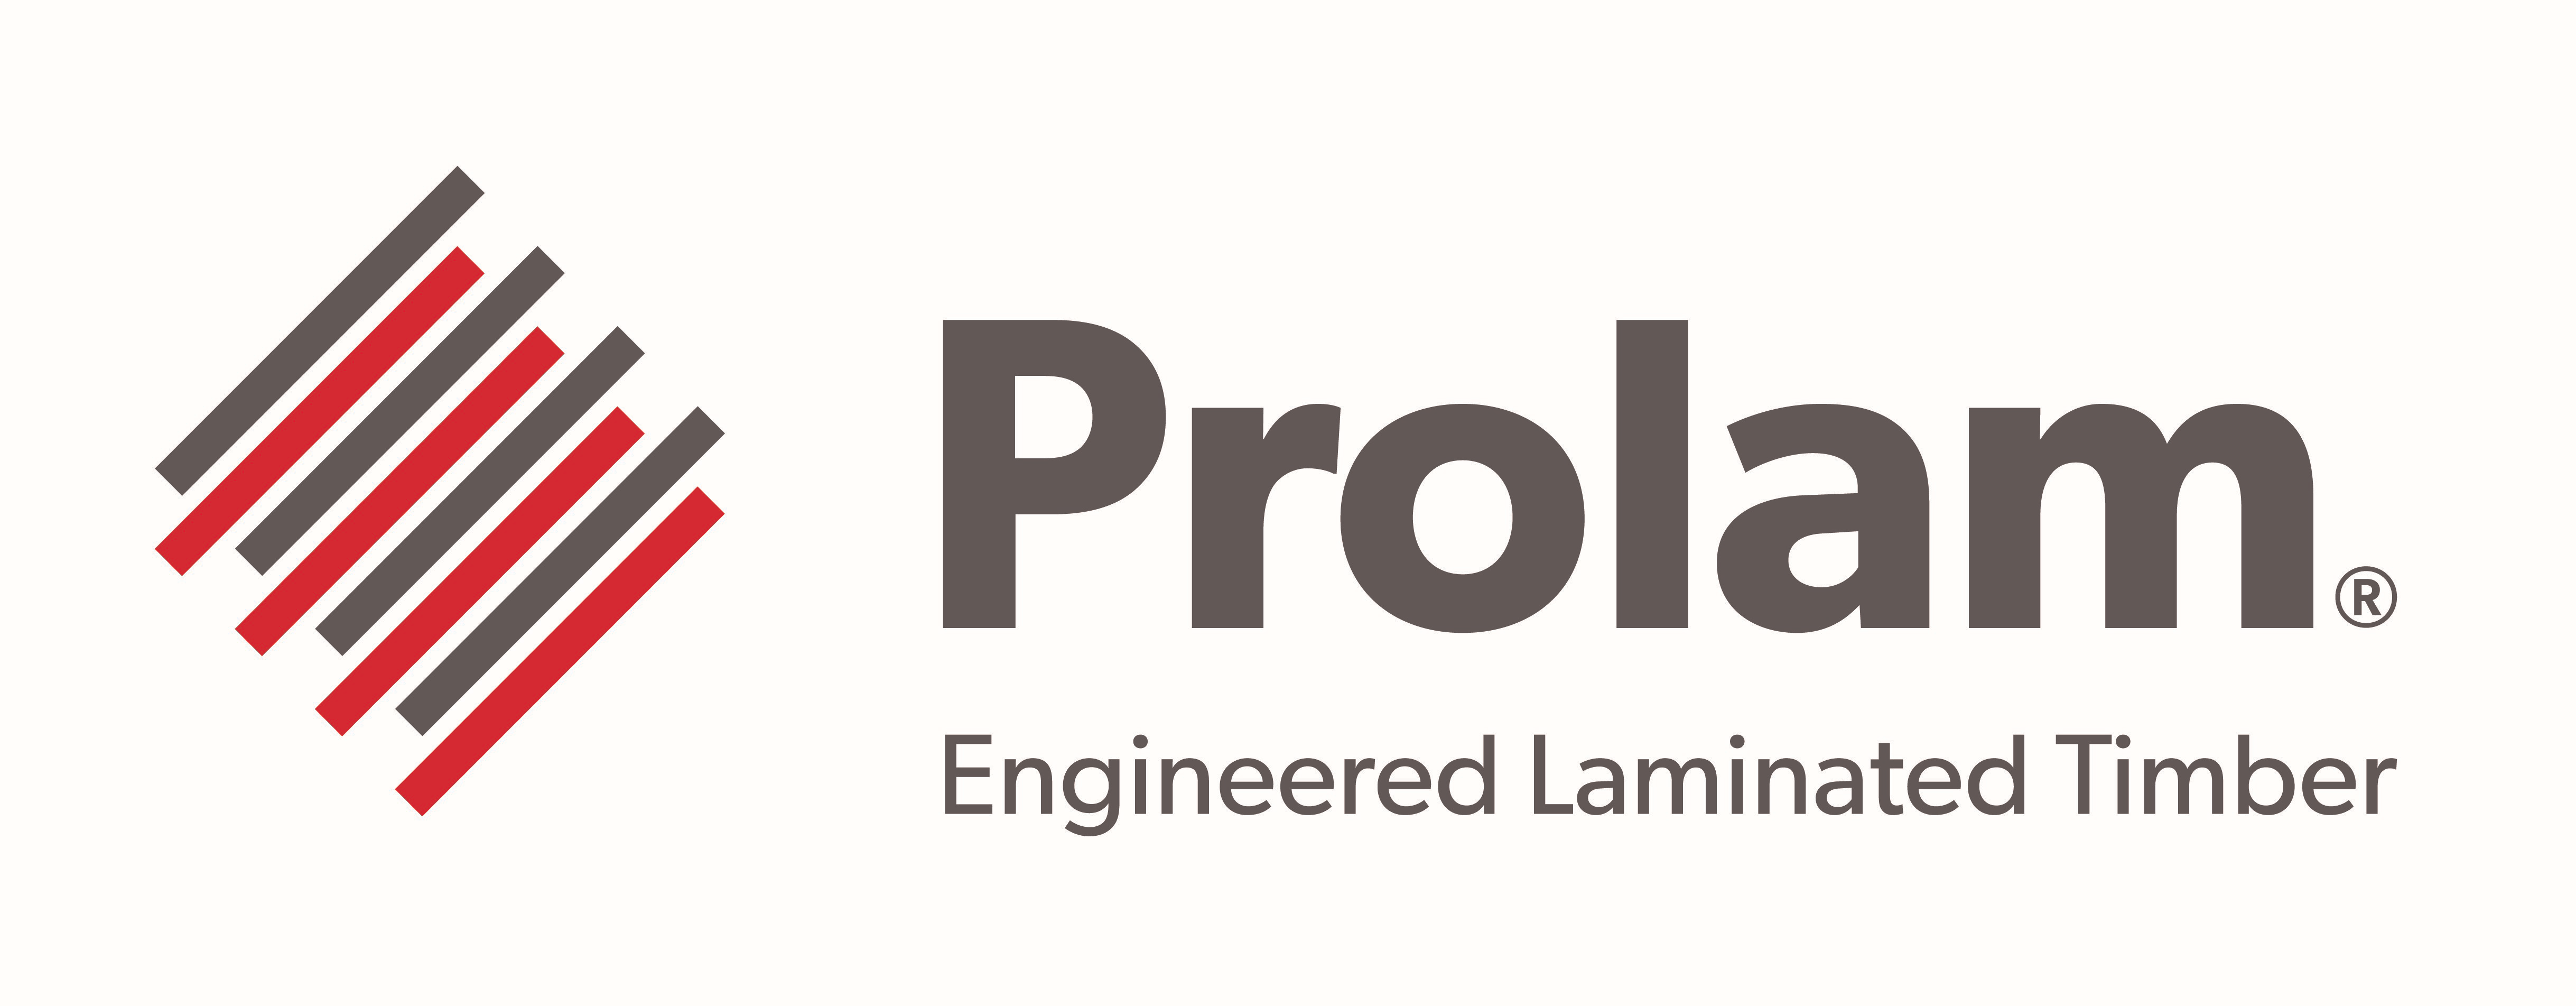 108983161 prolam logo high resolution png